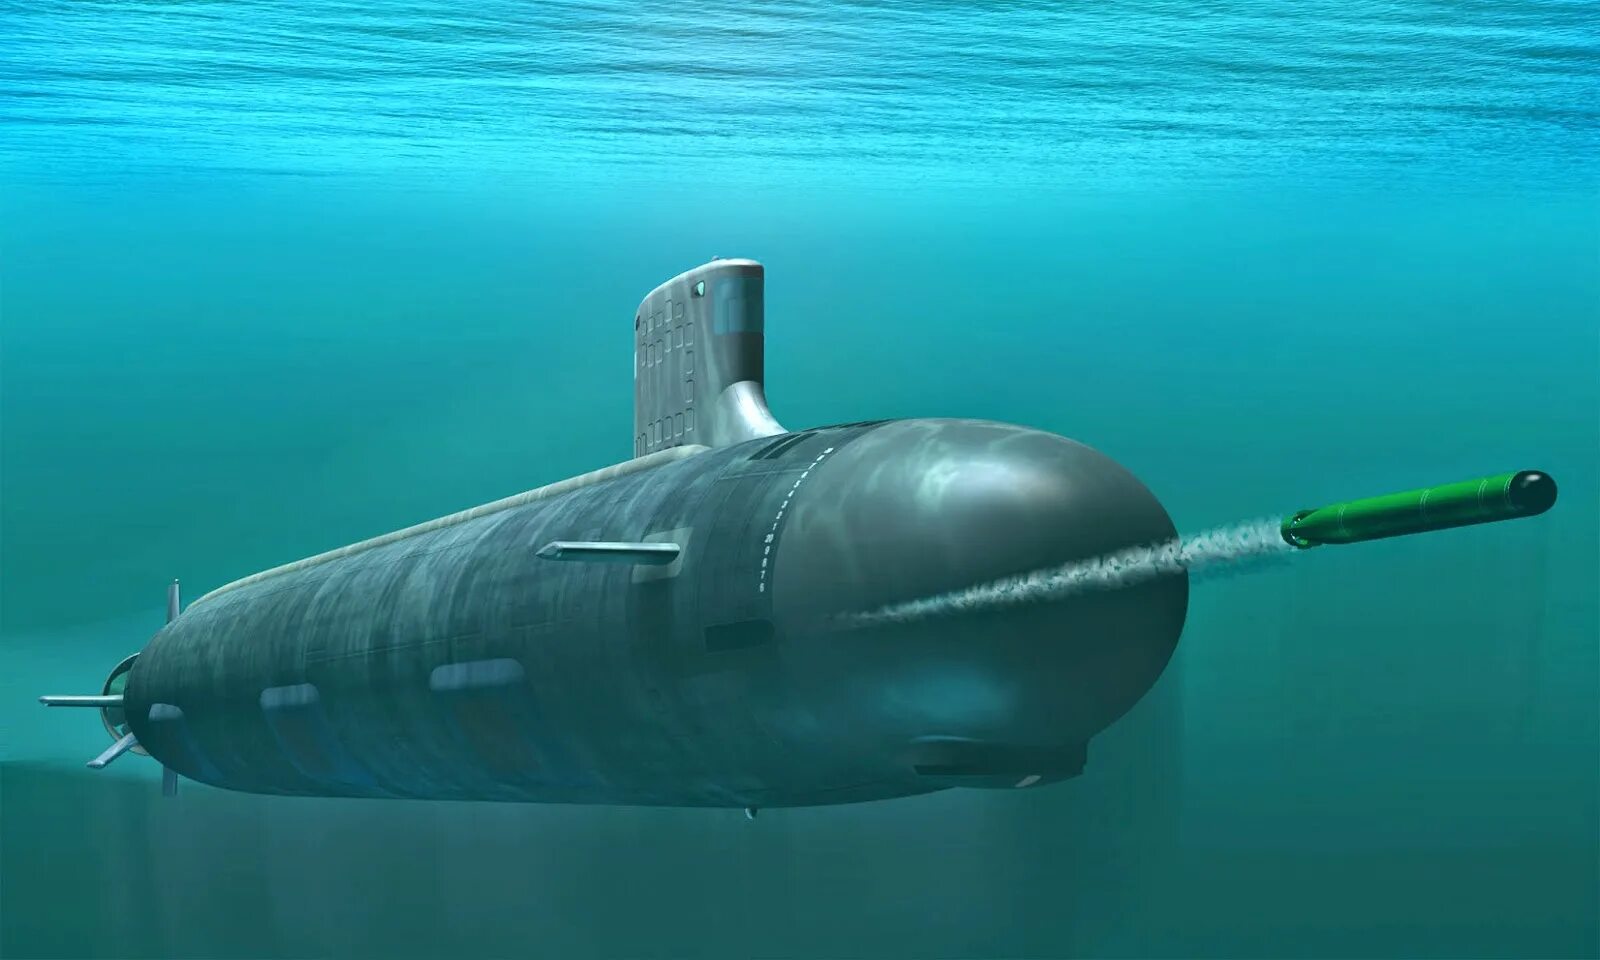 Как выглядит торпеда. Посейдон торпеда. Посейдон подводная лодка. Ядерная торпеда Посейдон. Подводная лодка субмарина.